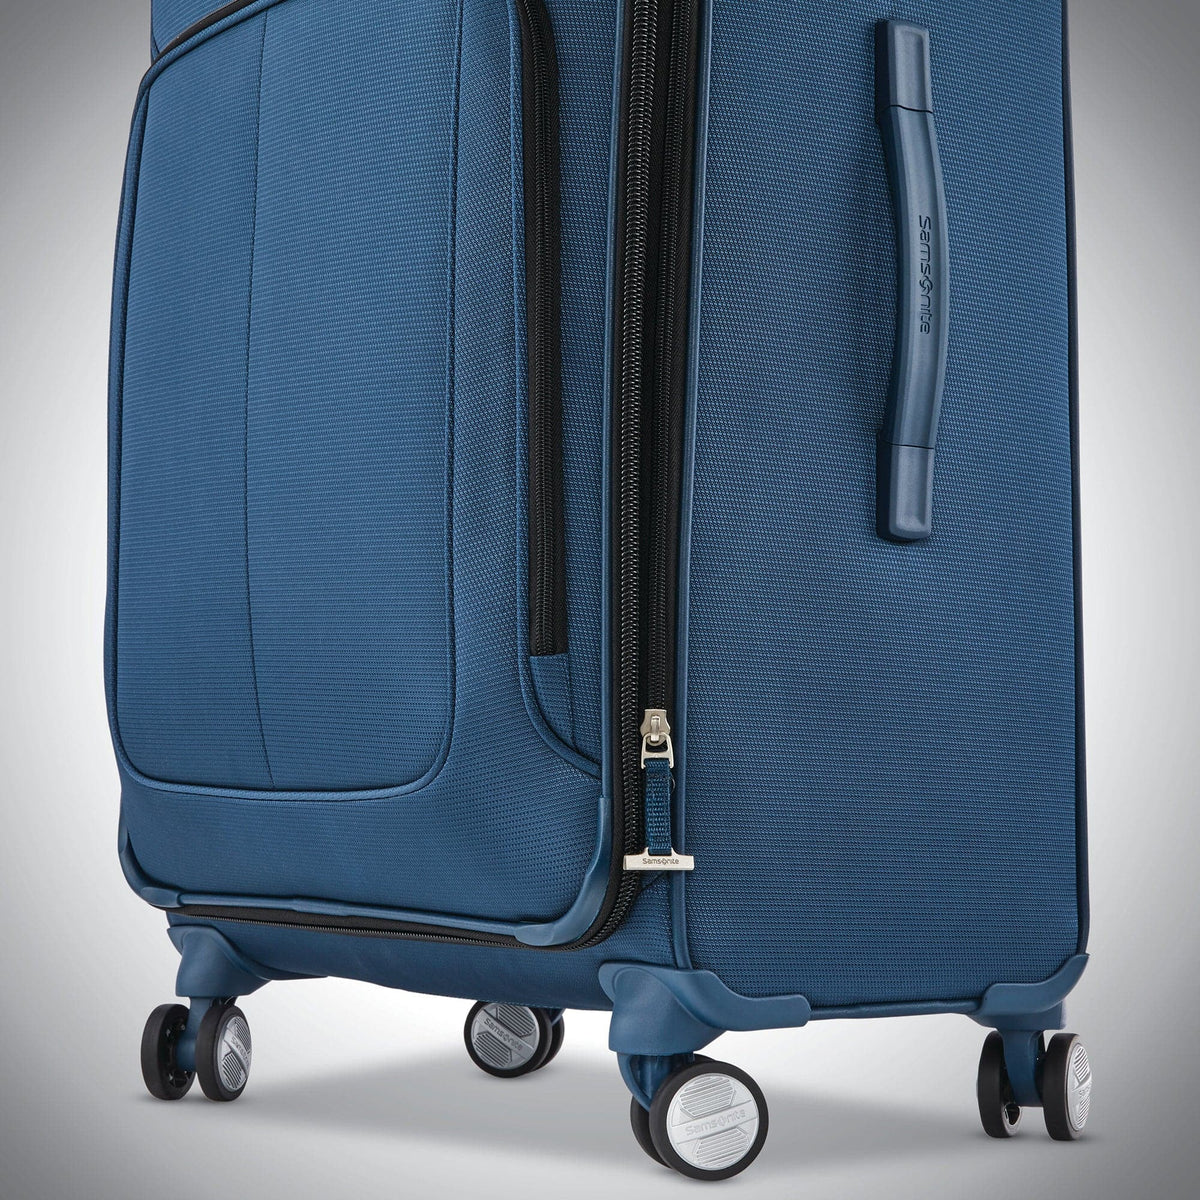 Samsonite SoLyte DLX Extra Large Expandable Spinner Luggage